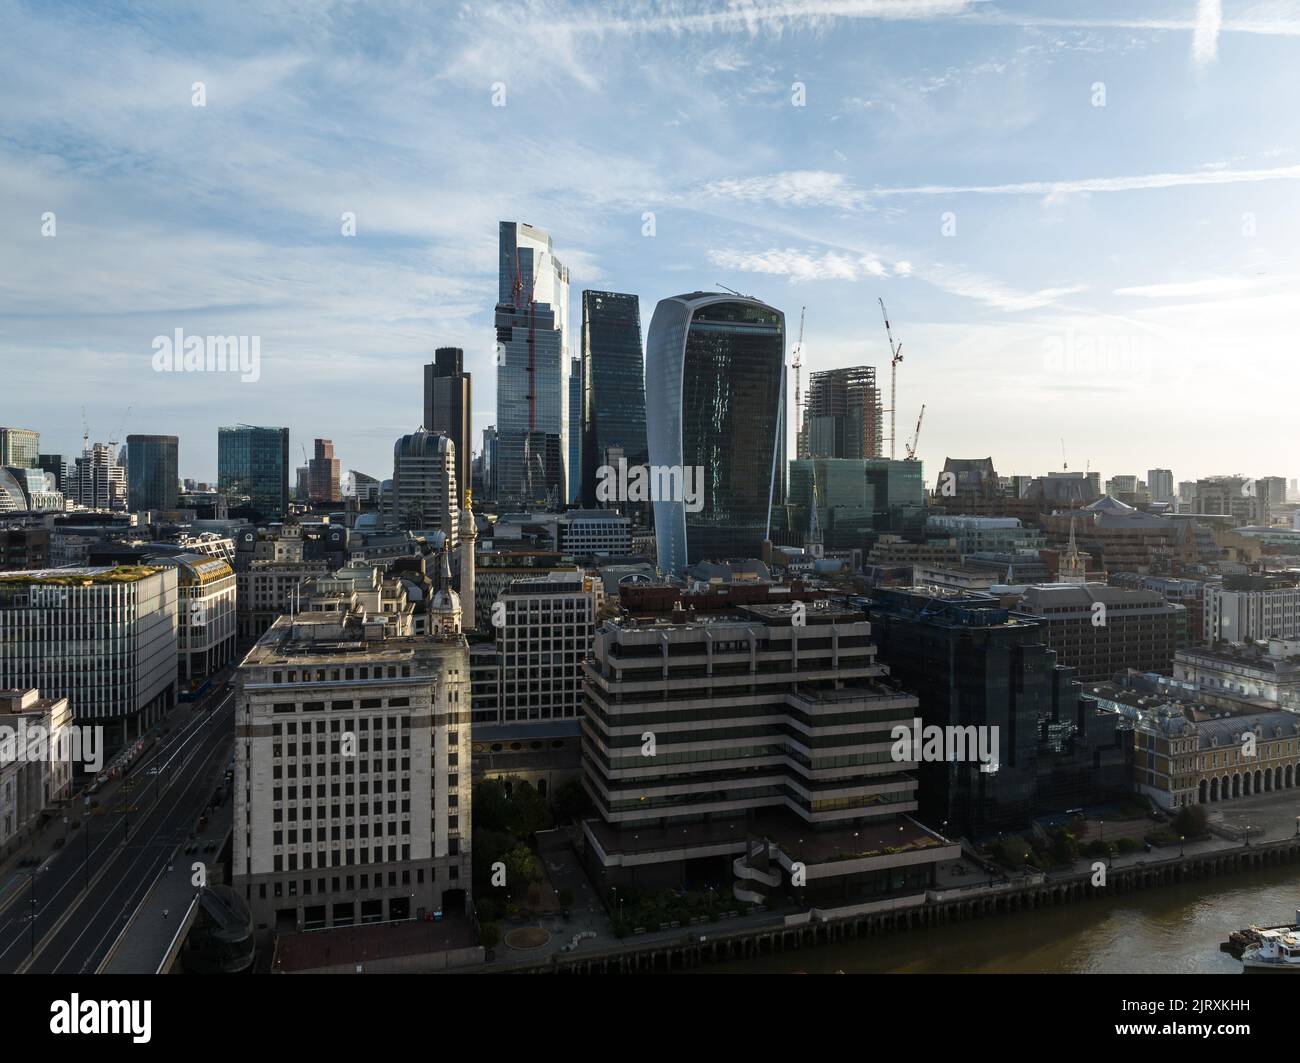 London city skyline aerial view Stock Photo - Alamy